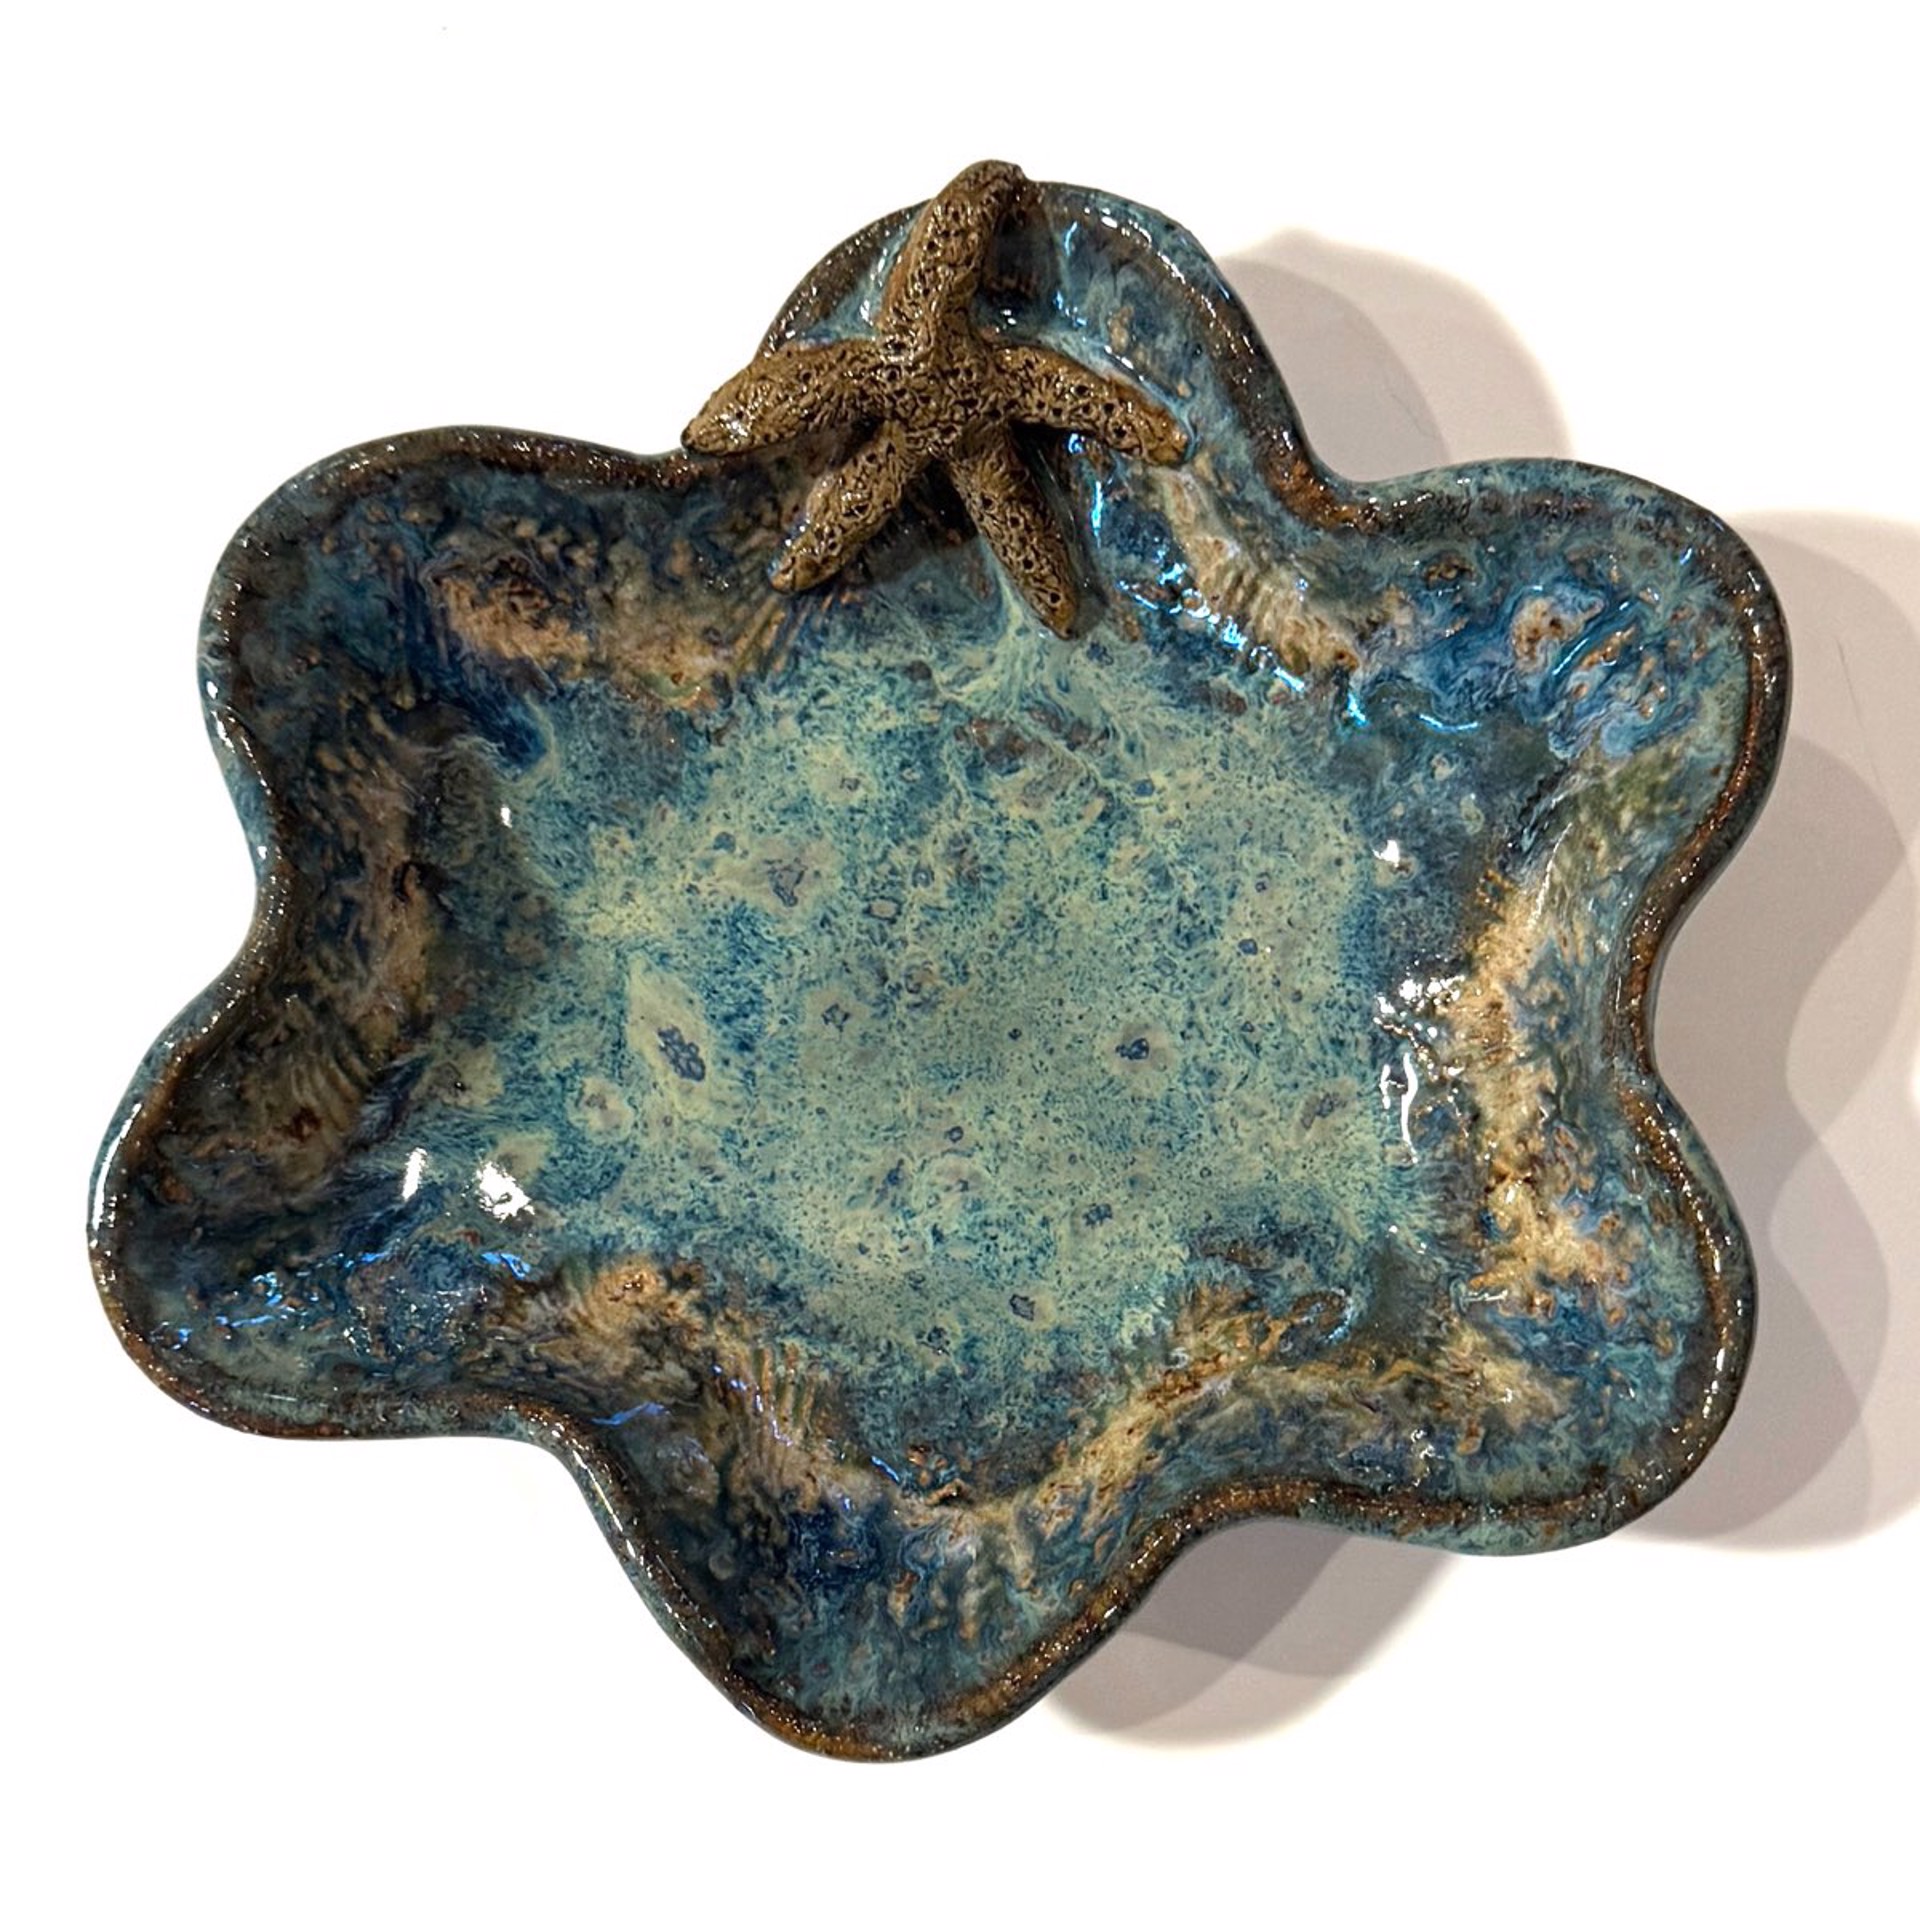 Pool Dish with One Starfish (Blue Glaze) LG23-1178 by Jim & Steffi Logan